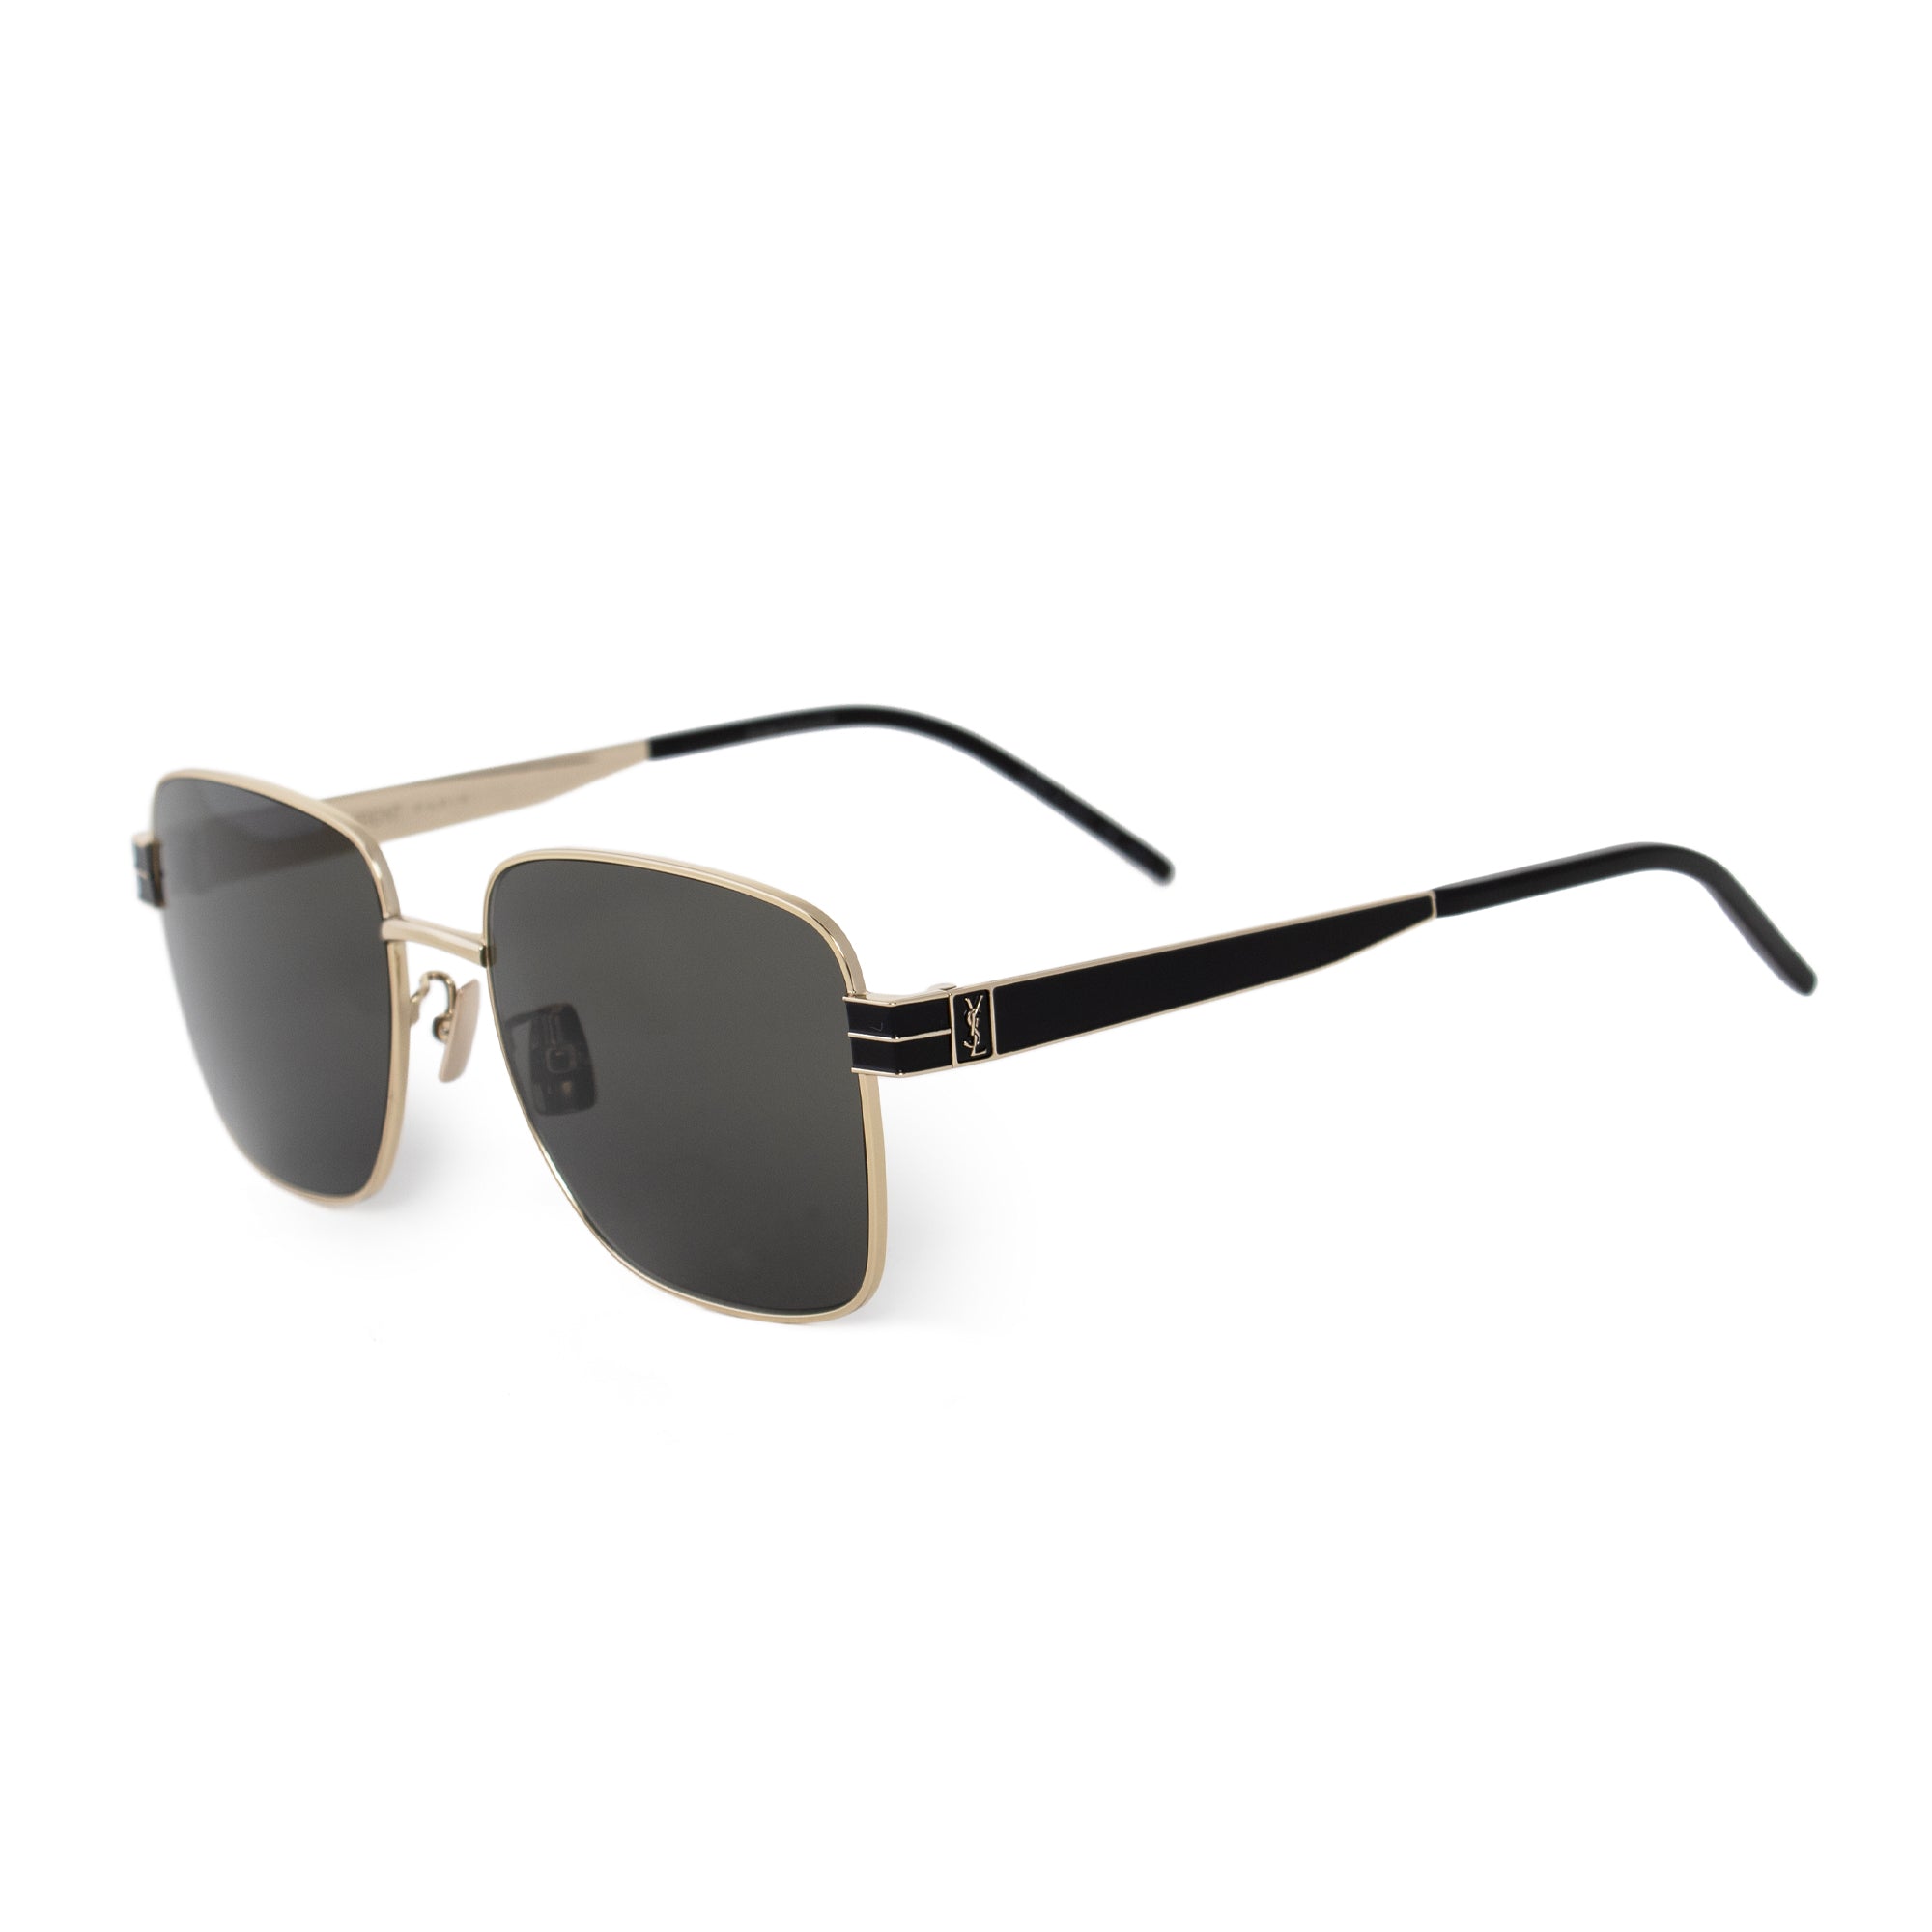 Saint Laurent Square Sunglasses SLM55 005 57